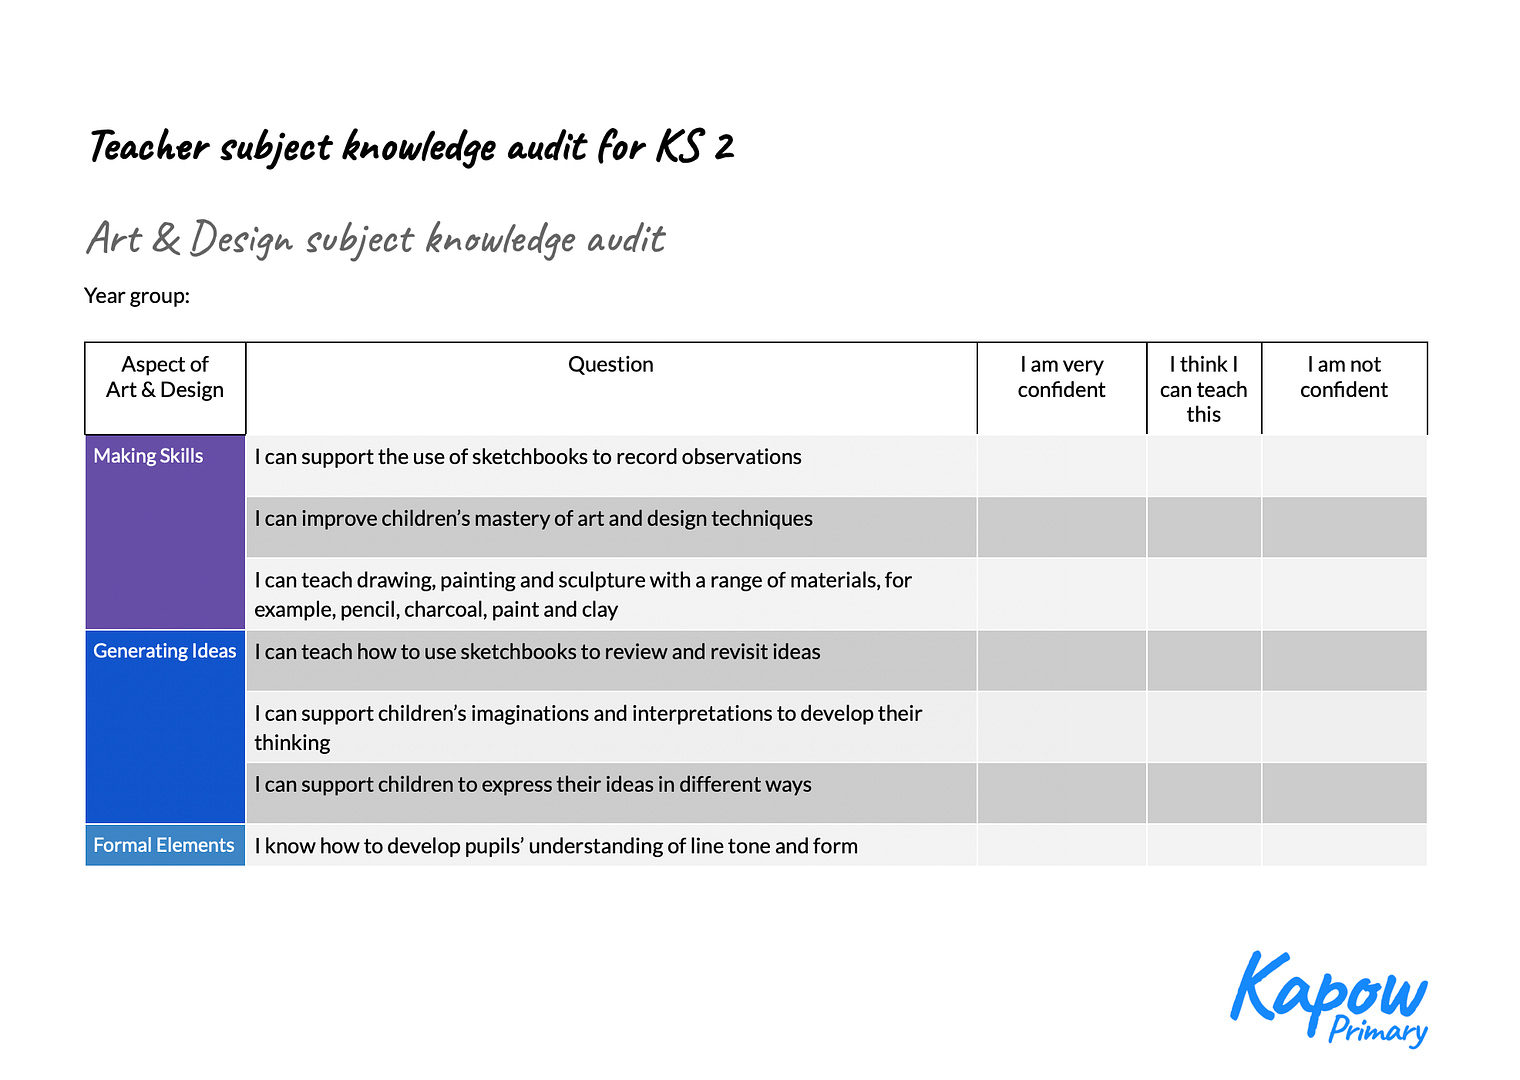 Teacher subject knowledge audit KS2